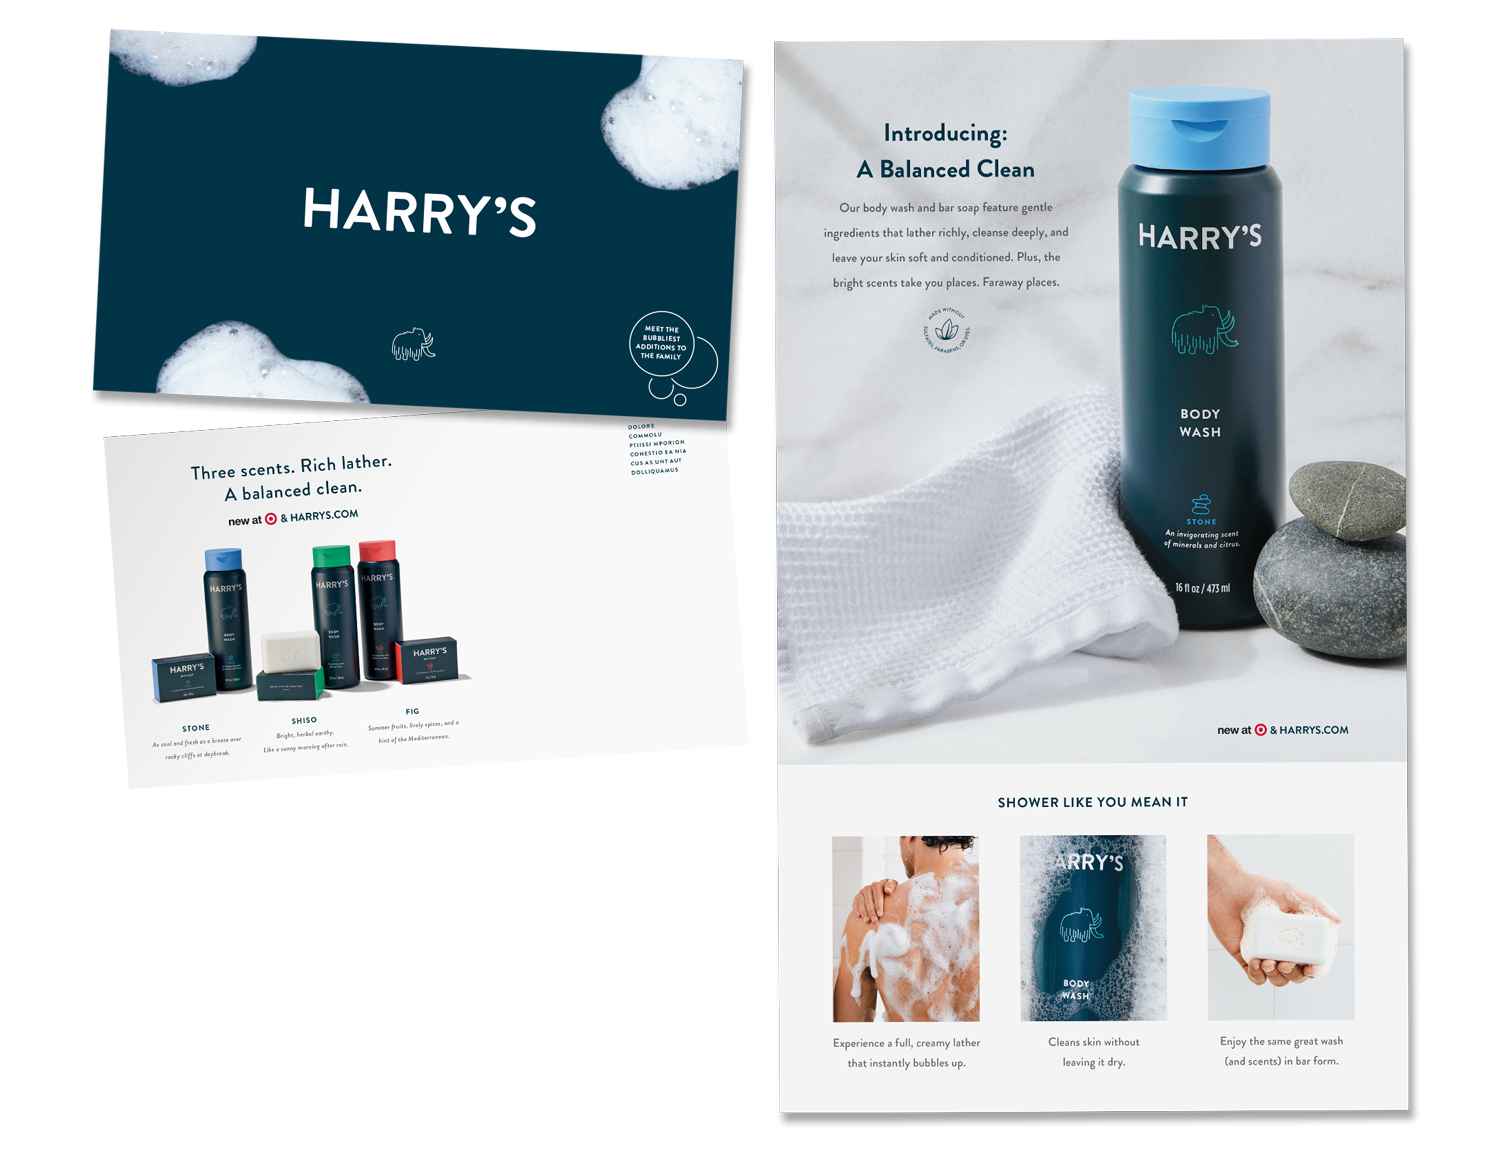 Harry's: Body Wash Campaign — Luke Crisell